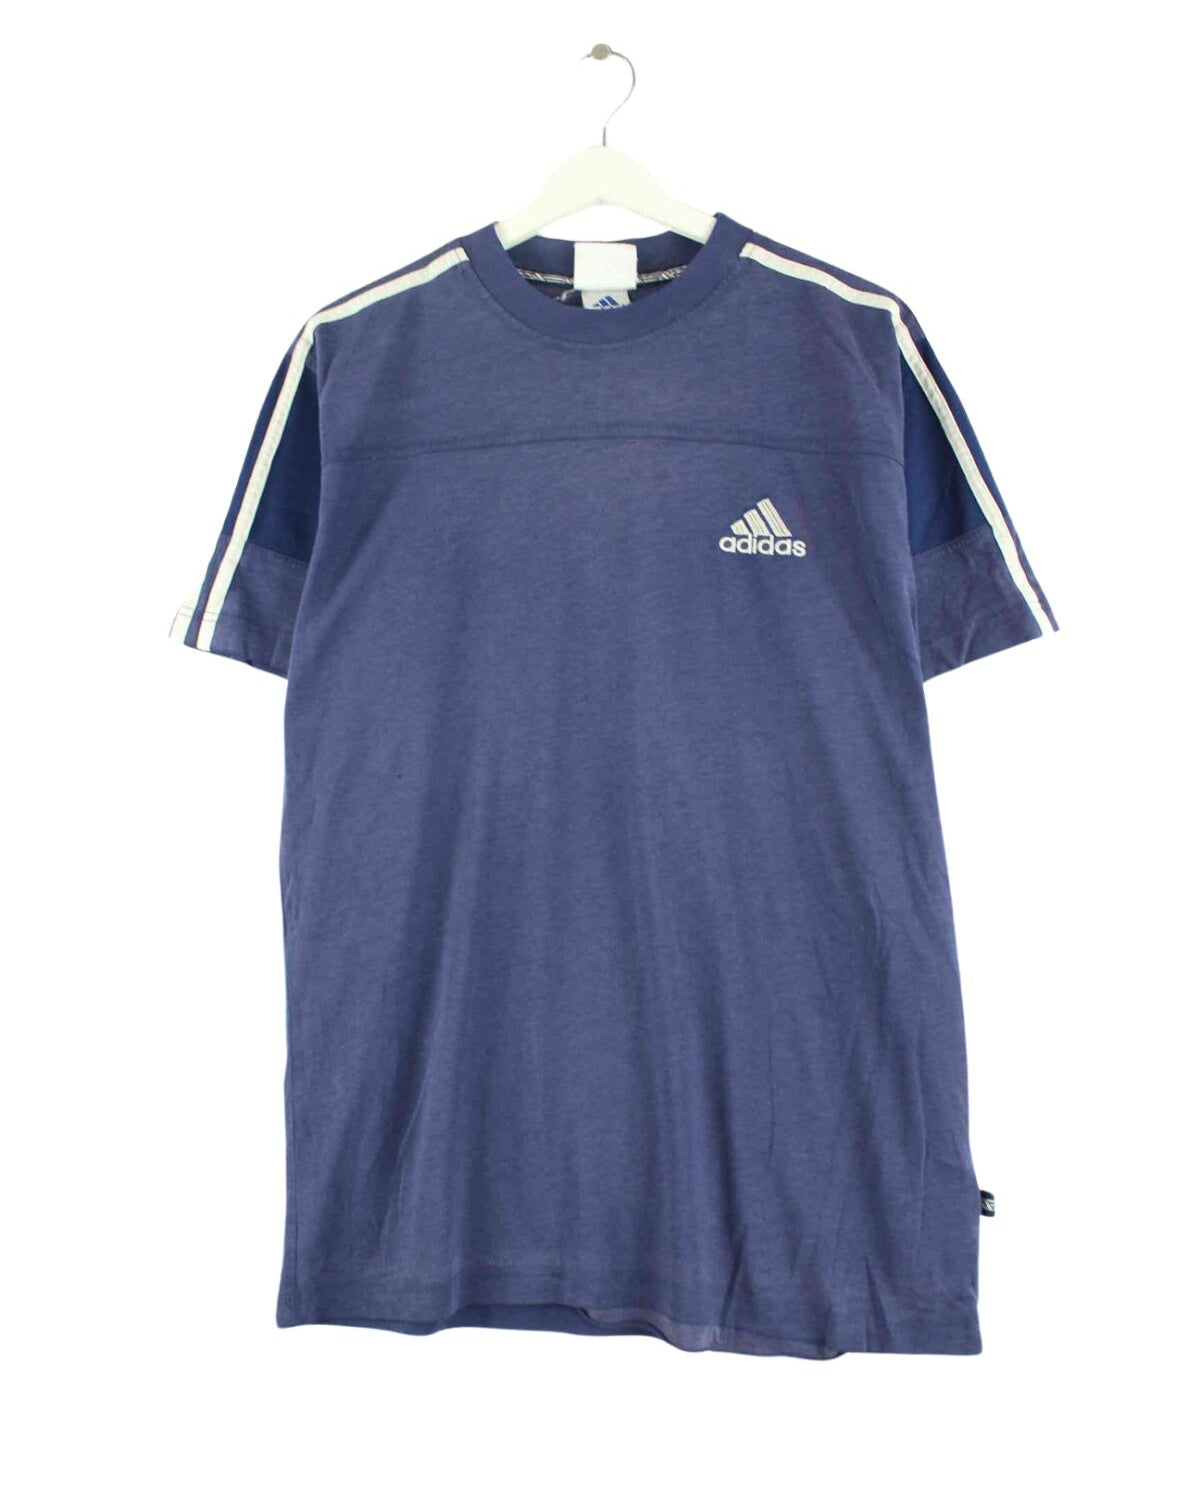 Adidas 90s Vintage Basic T-Shirt Blau L (front image)